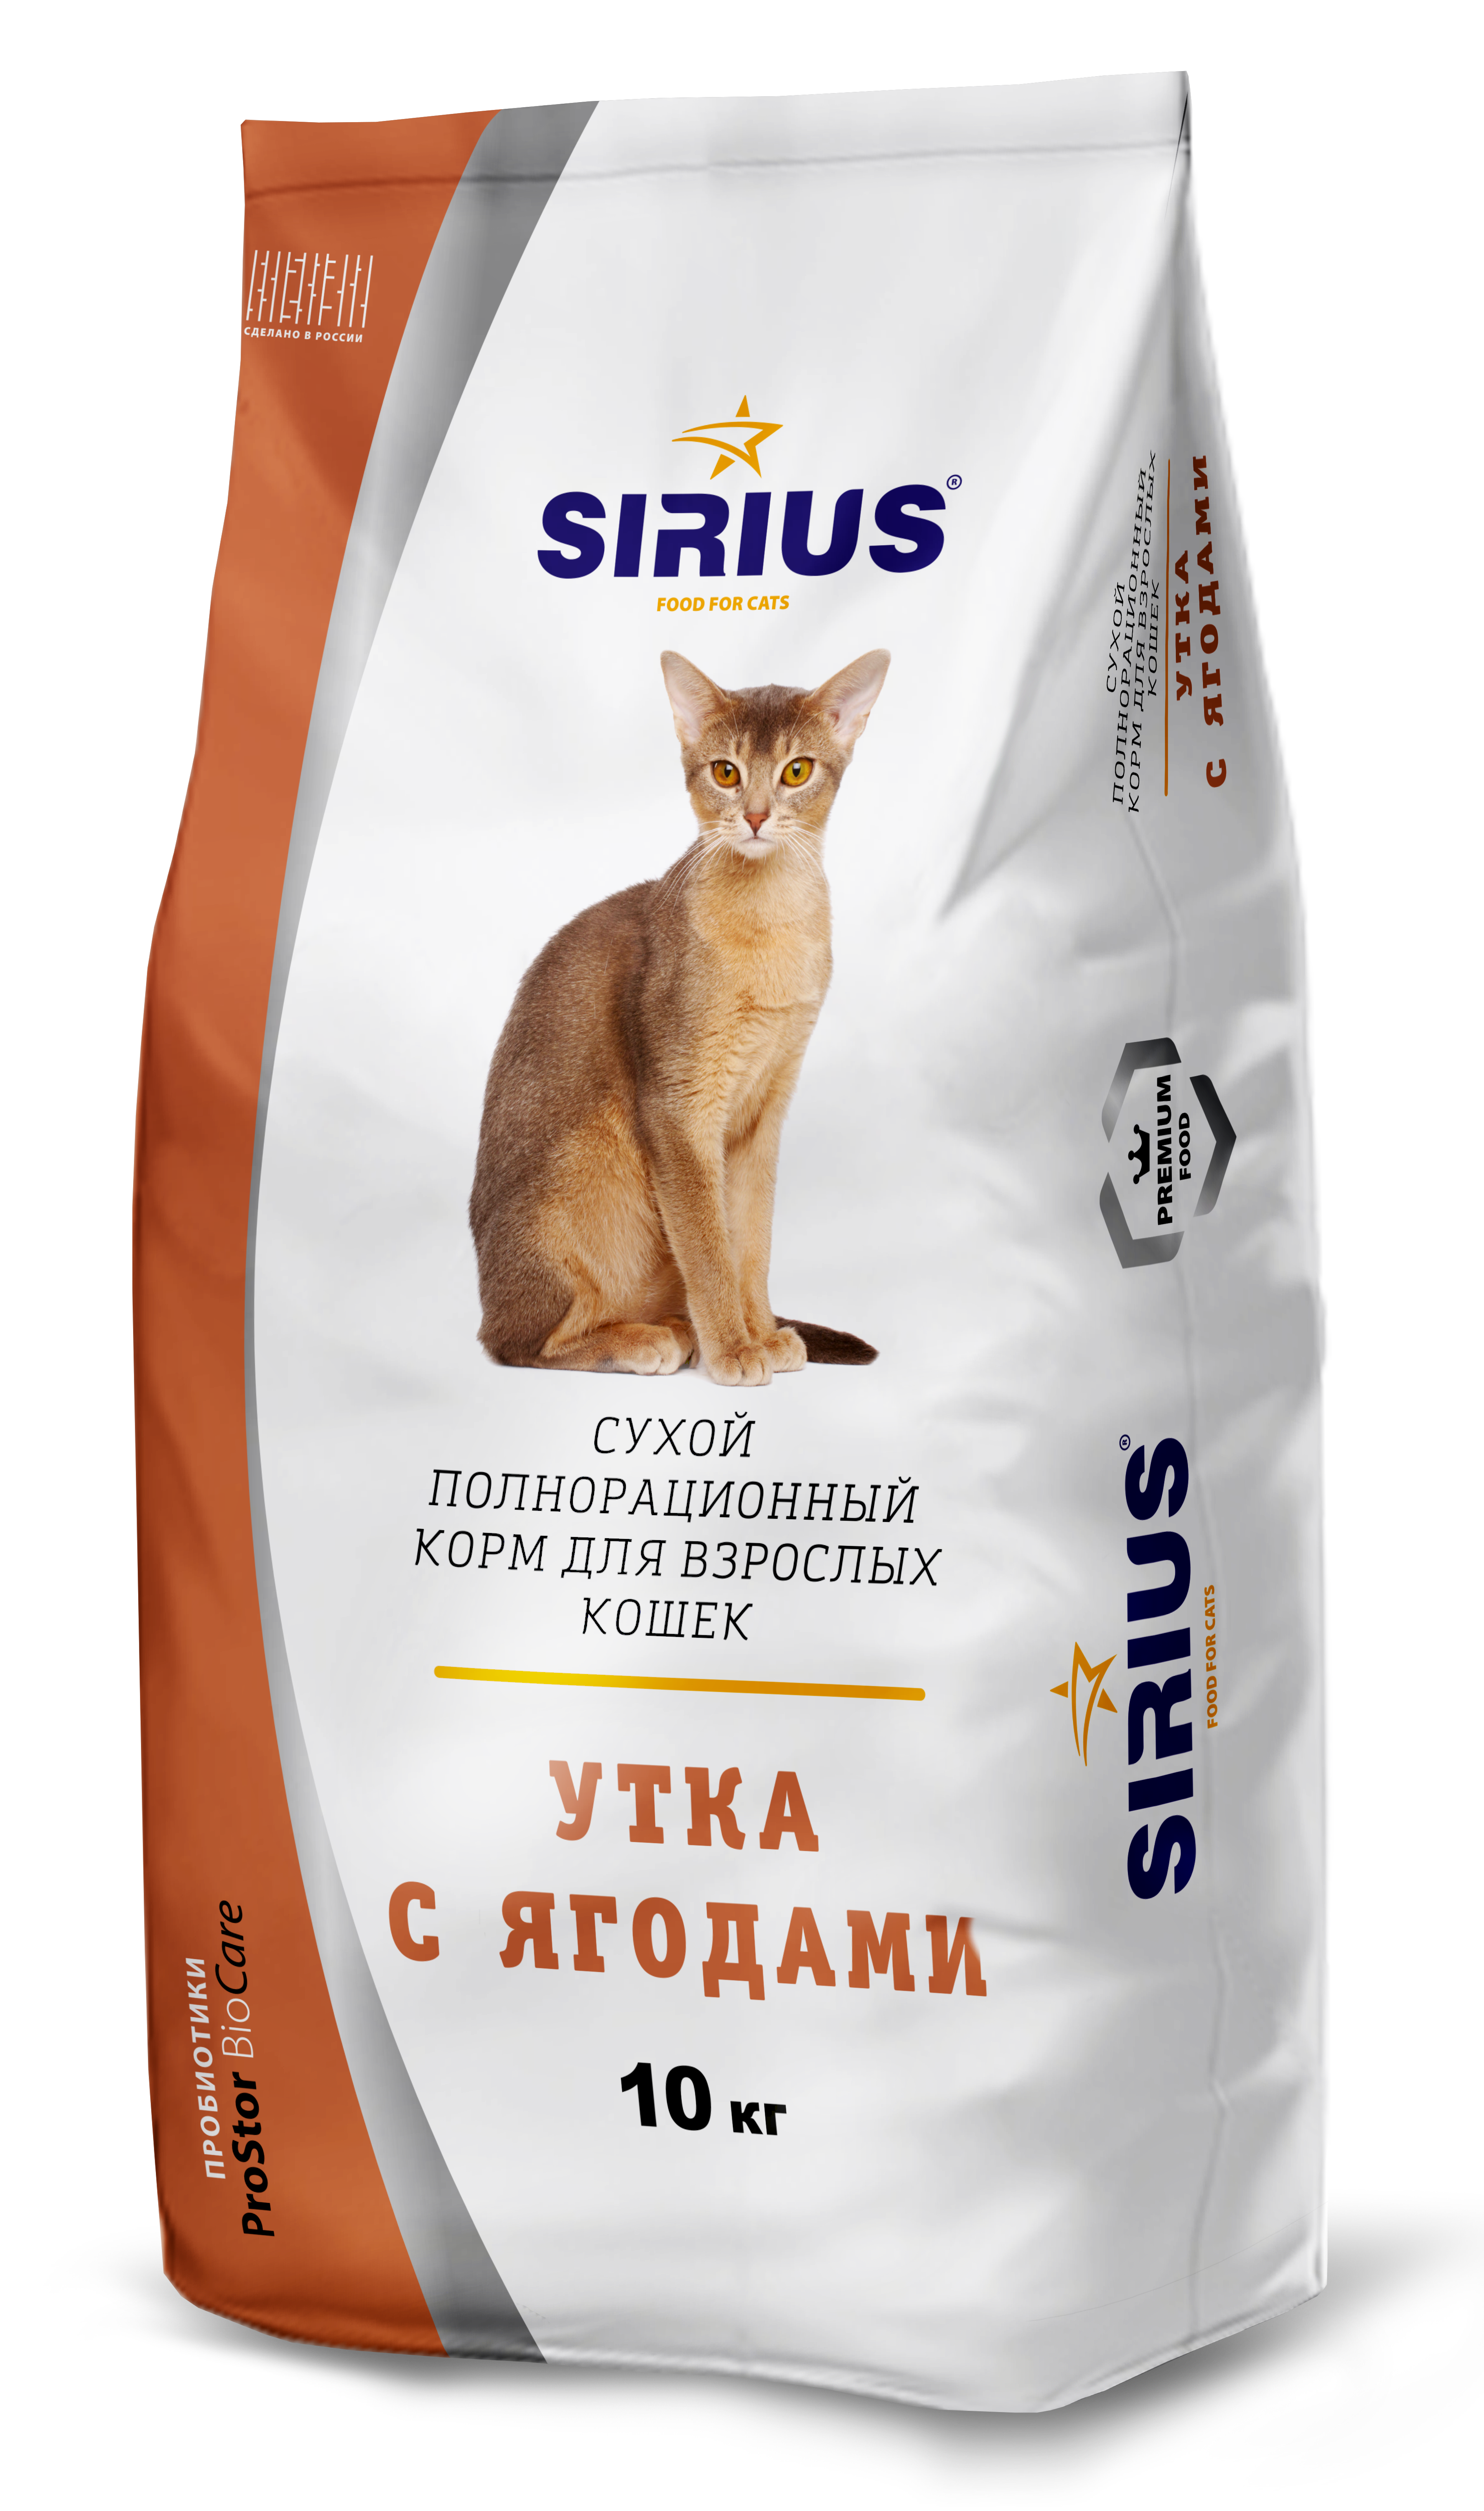 Лучшие производители кормов для кошек. Корм Сириус для кошек лосось и рис. Сириус корм для кошек 10 кг. Sirius Platinum корм. Корм Сириус премиум для кошек.